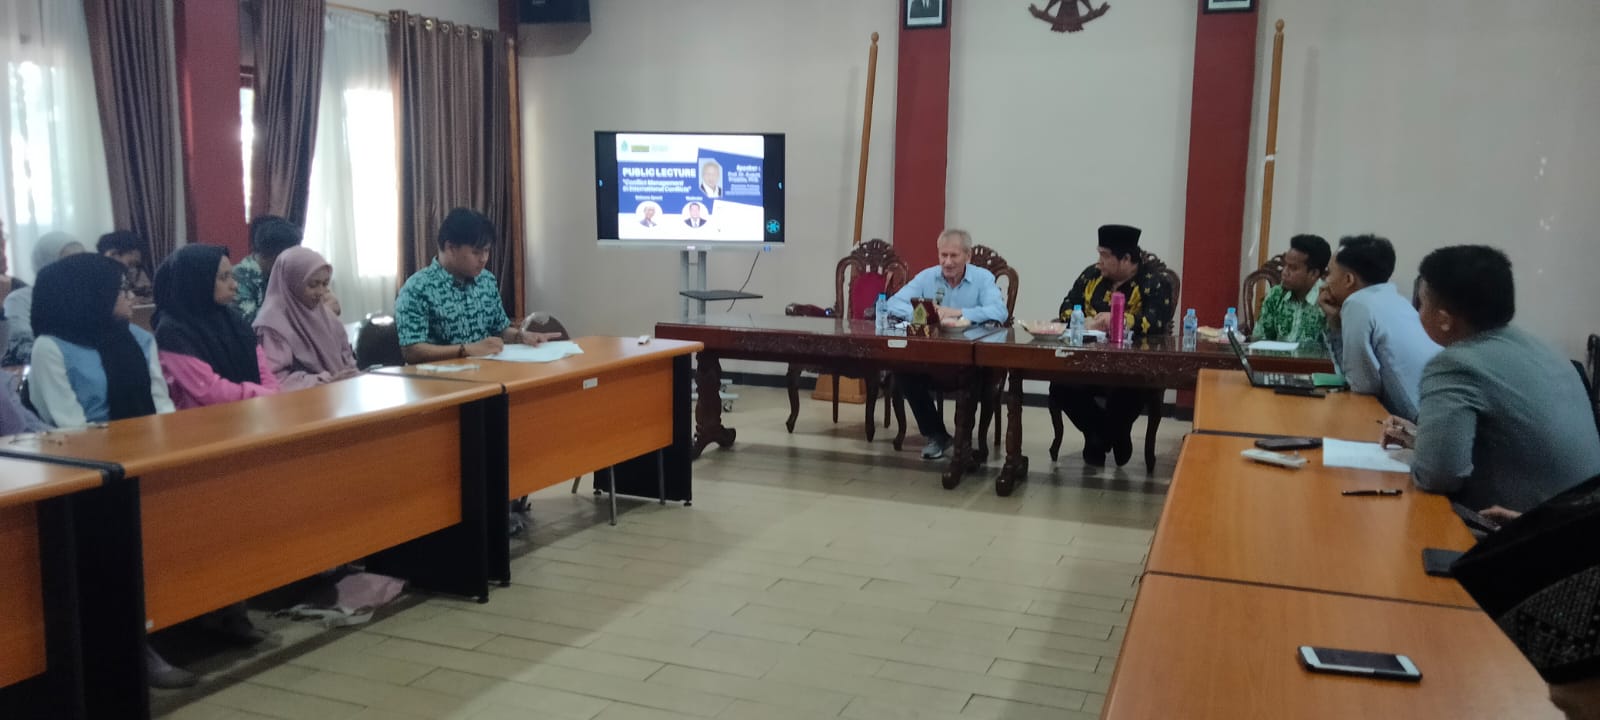 Program S2 IAT UIN Walisongo Semarang Gelar “Public Lecture” dengan Tajuk “How to Write and Publish Scientific Paper in the International Journal”